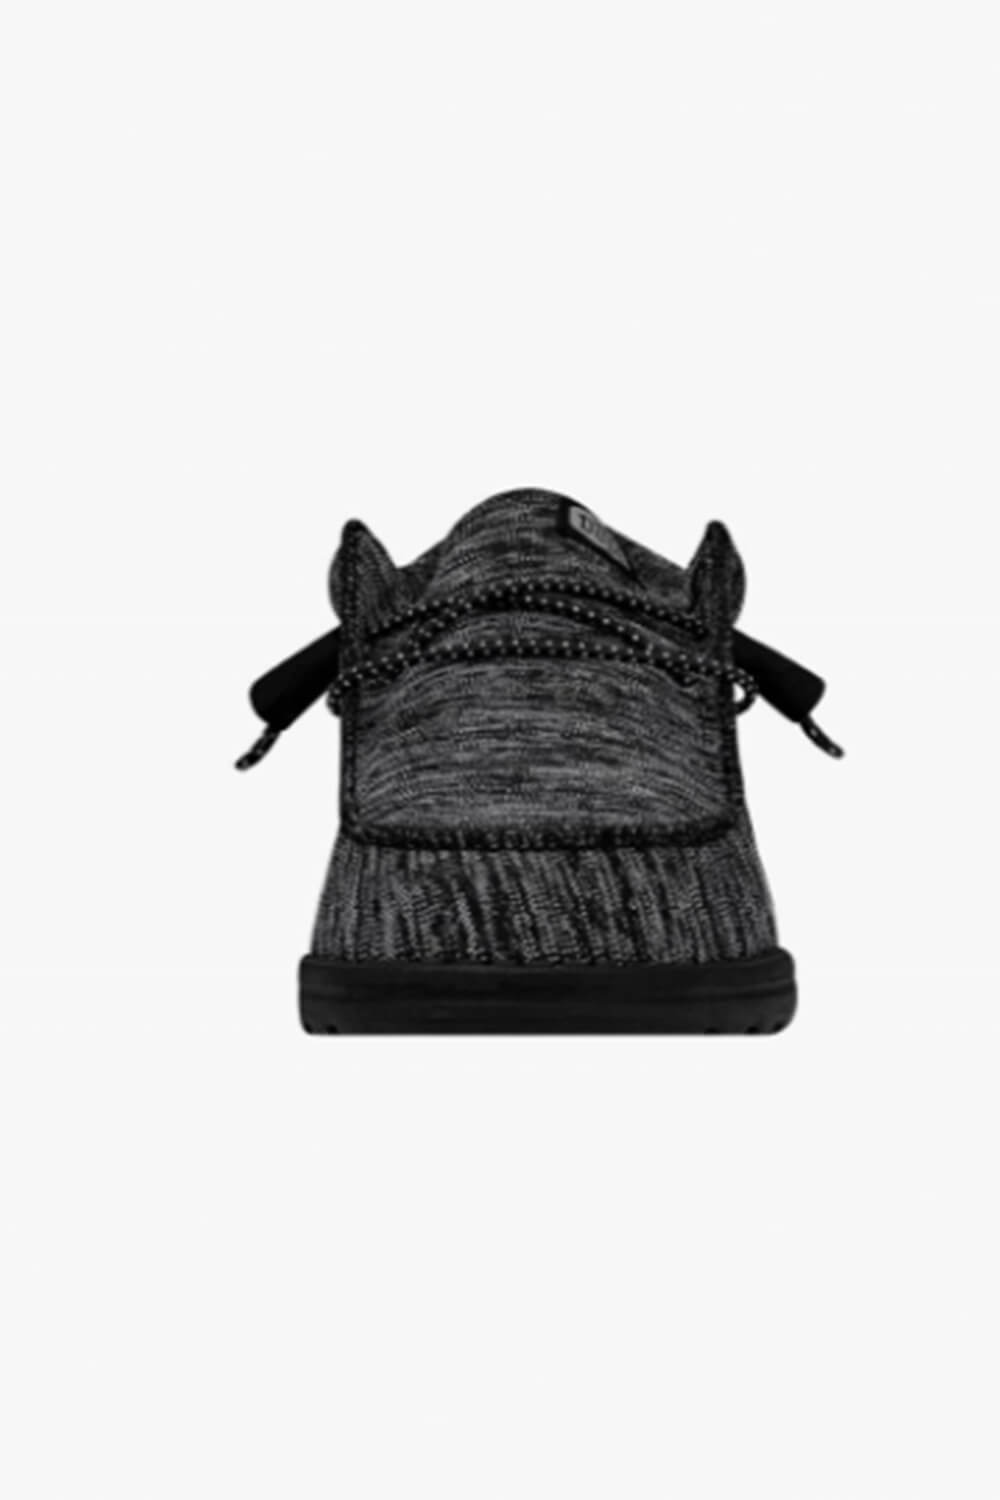 HEYDUDE Men's Wally Sport Knit Shoes in Black/Black